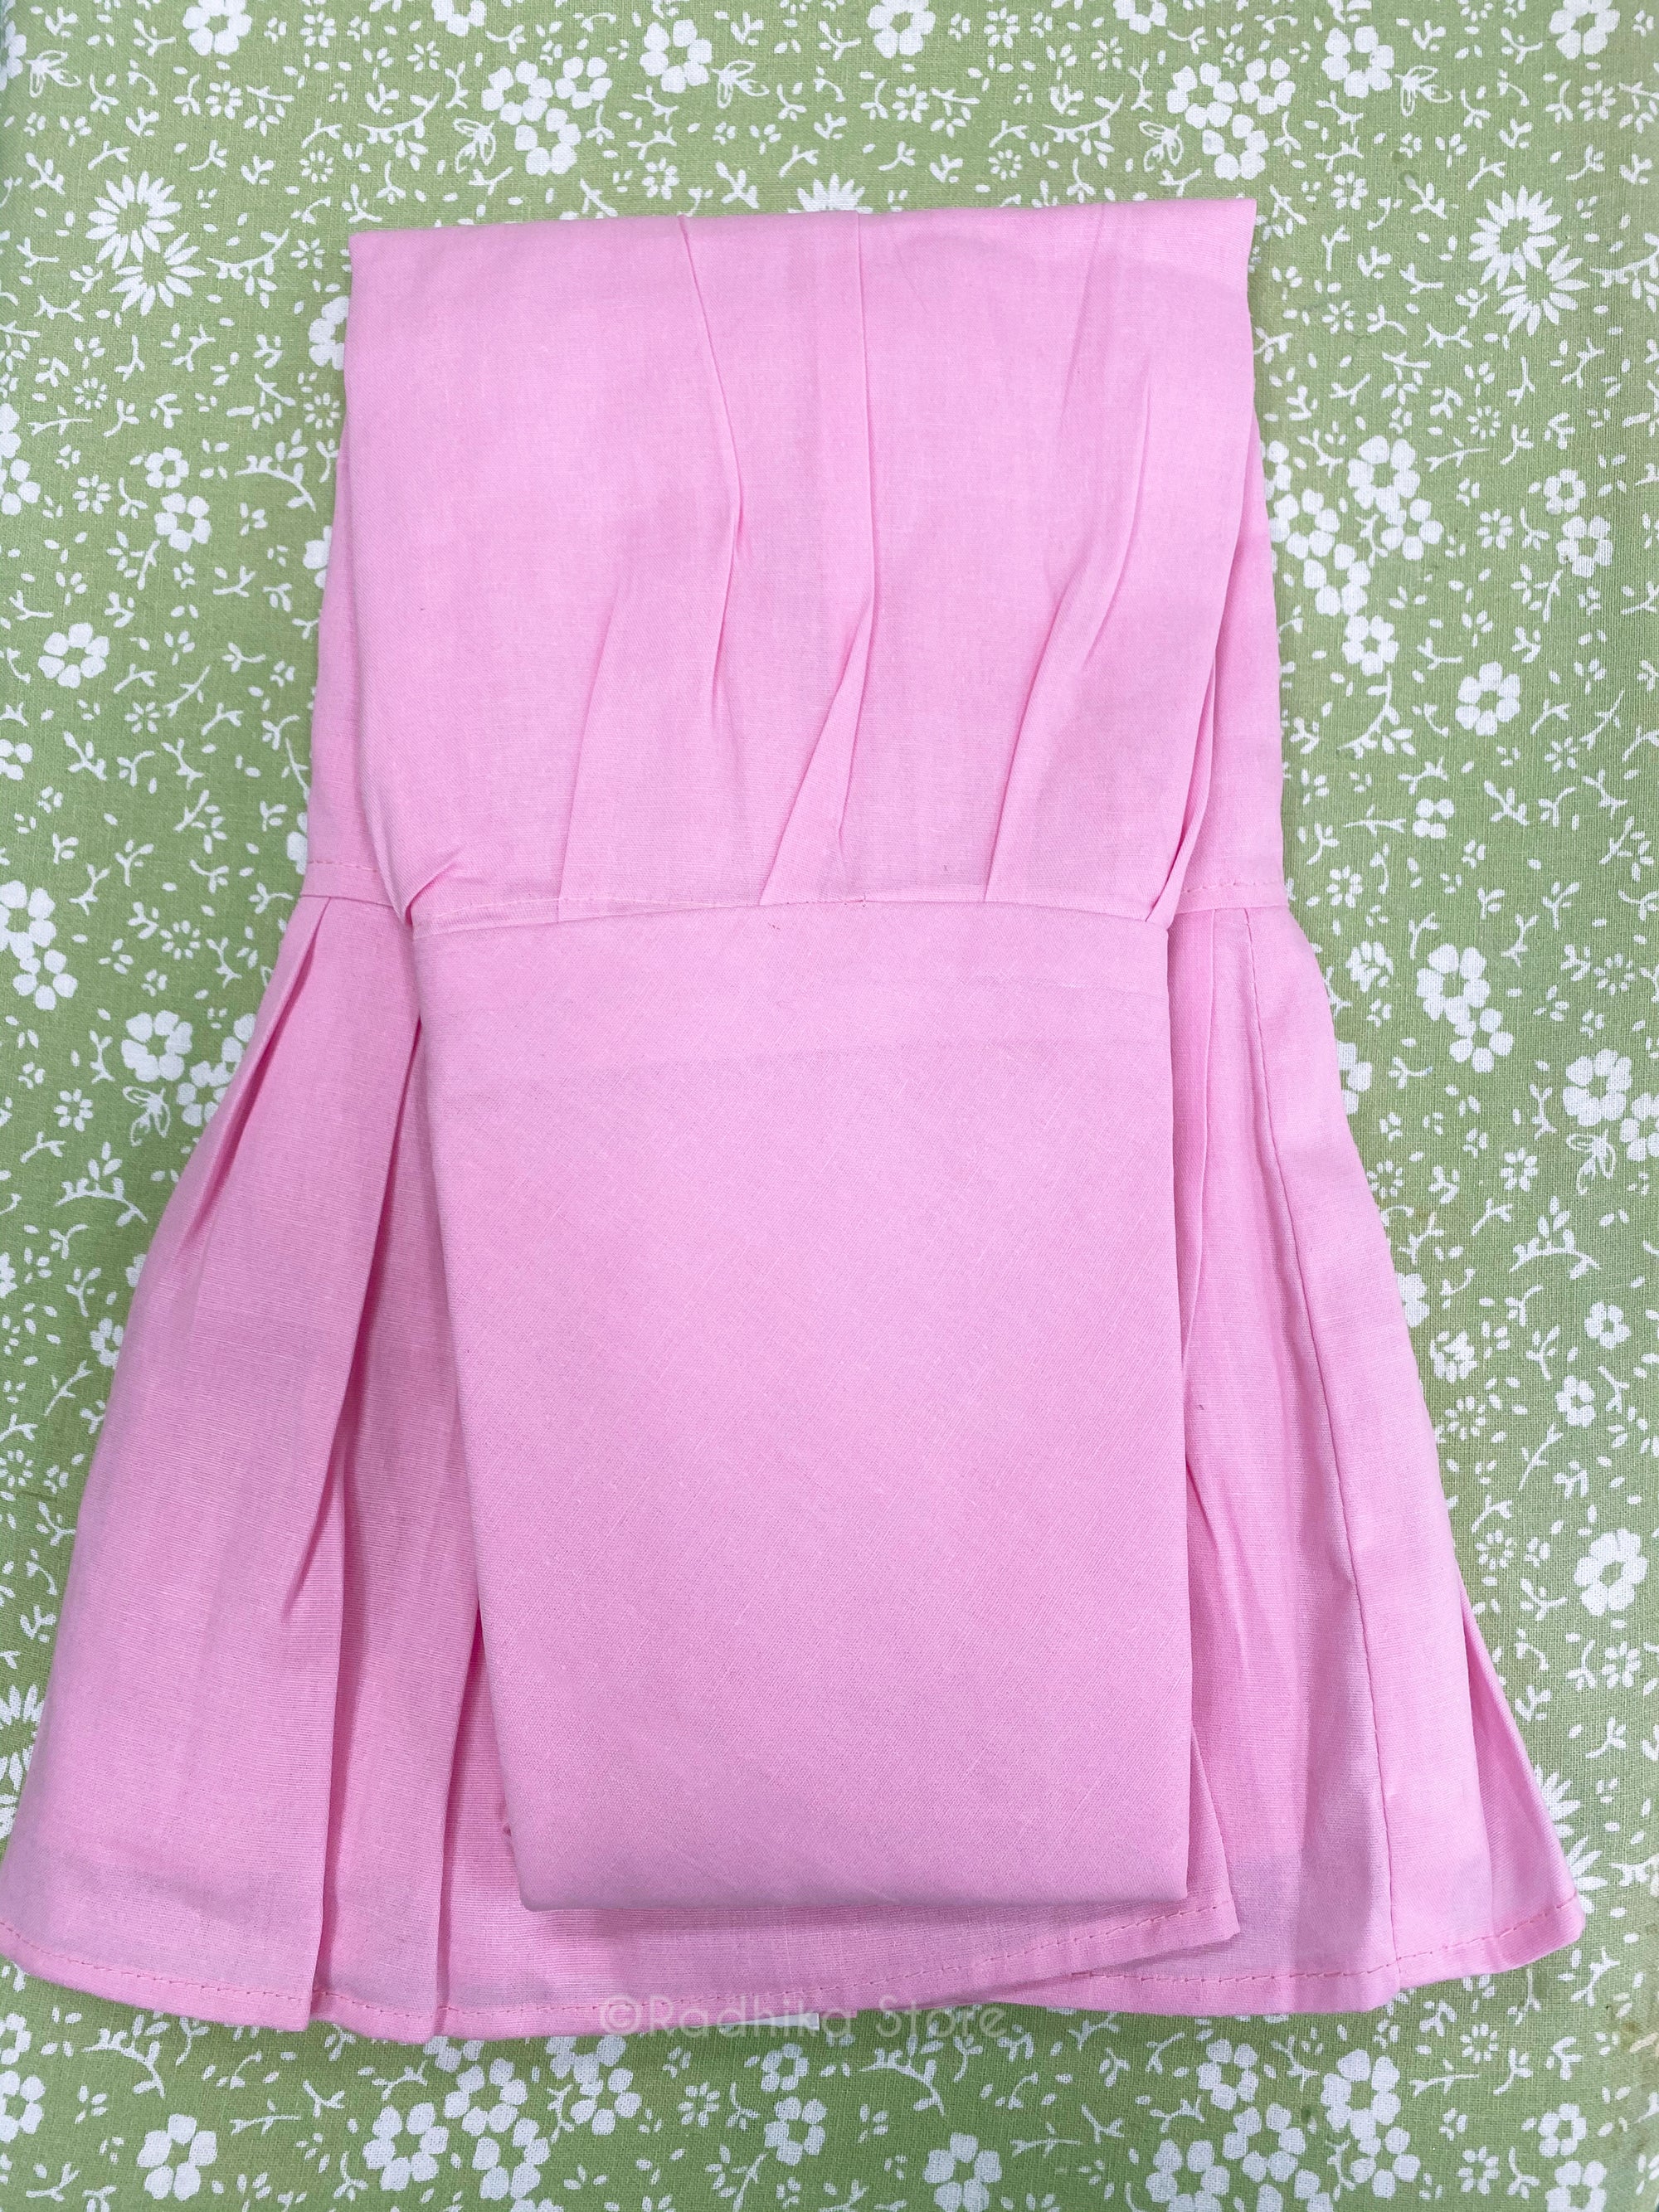 Beige Cotton Petticoat/ Slip - S, M, L, Xl - Radhika Store